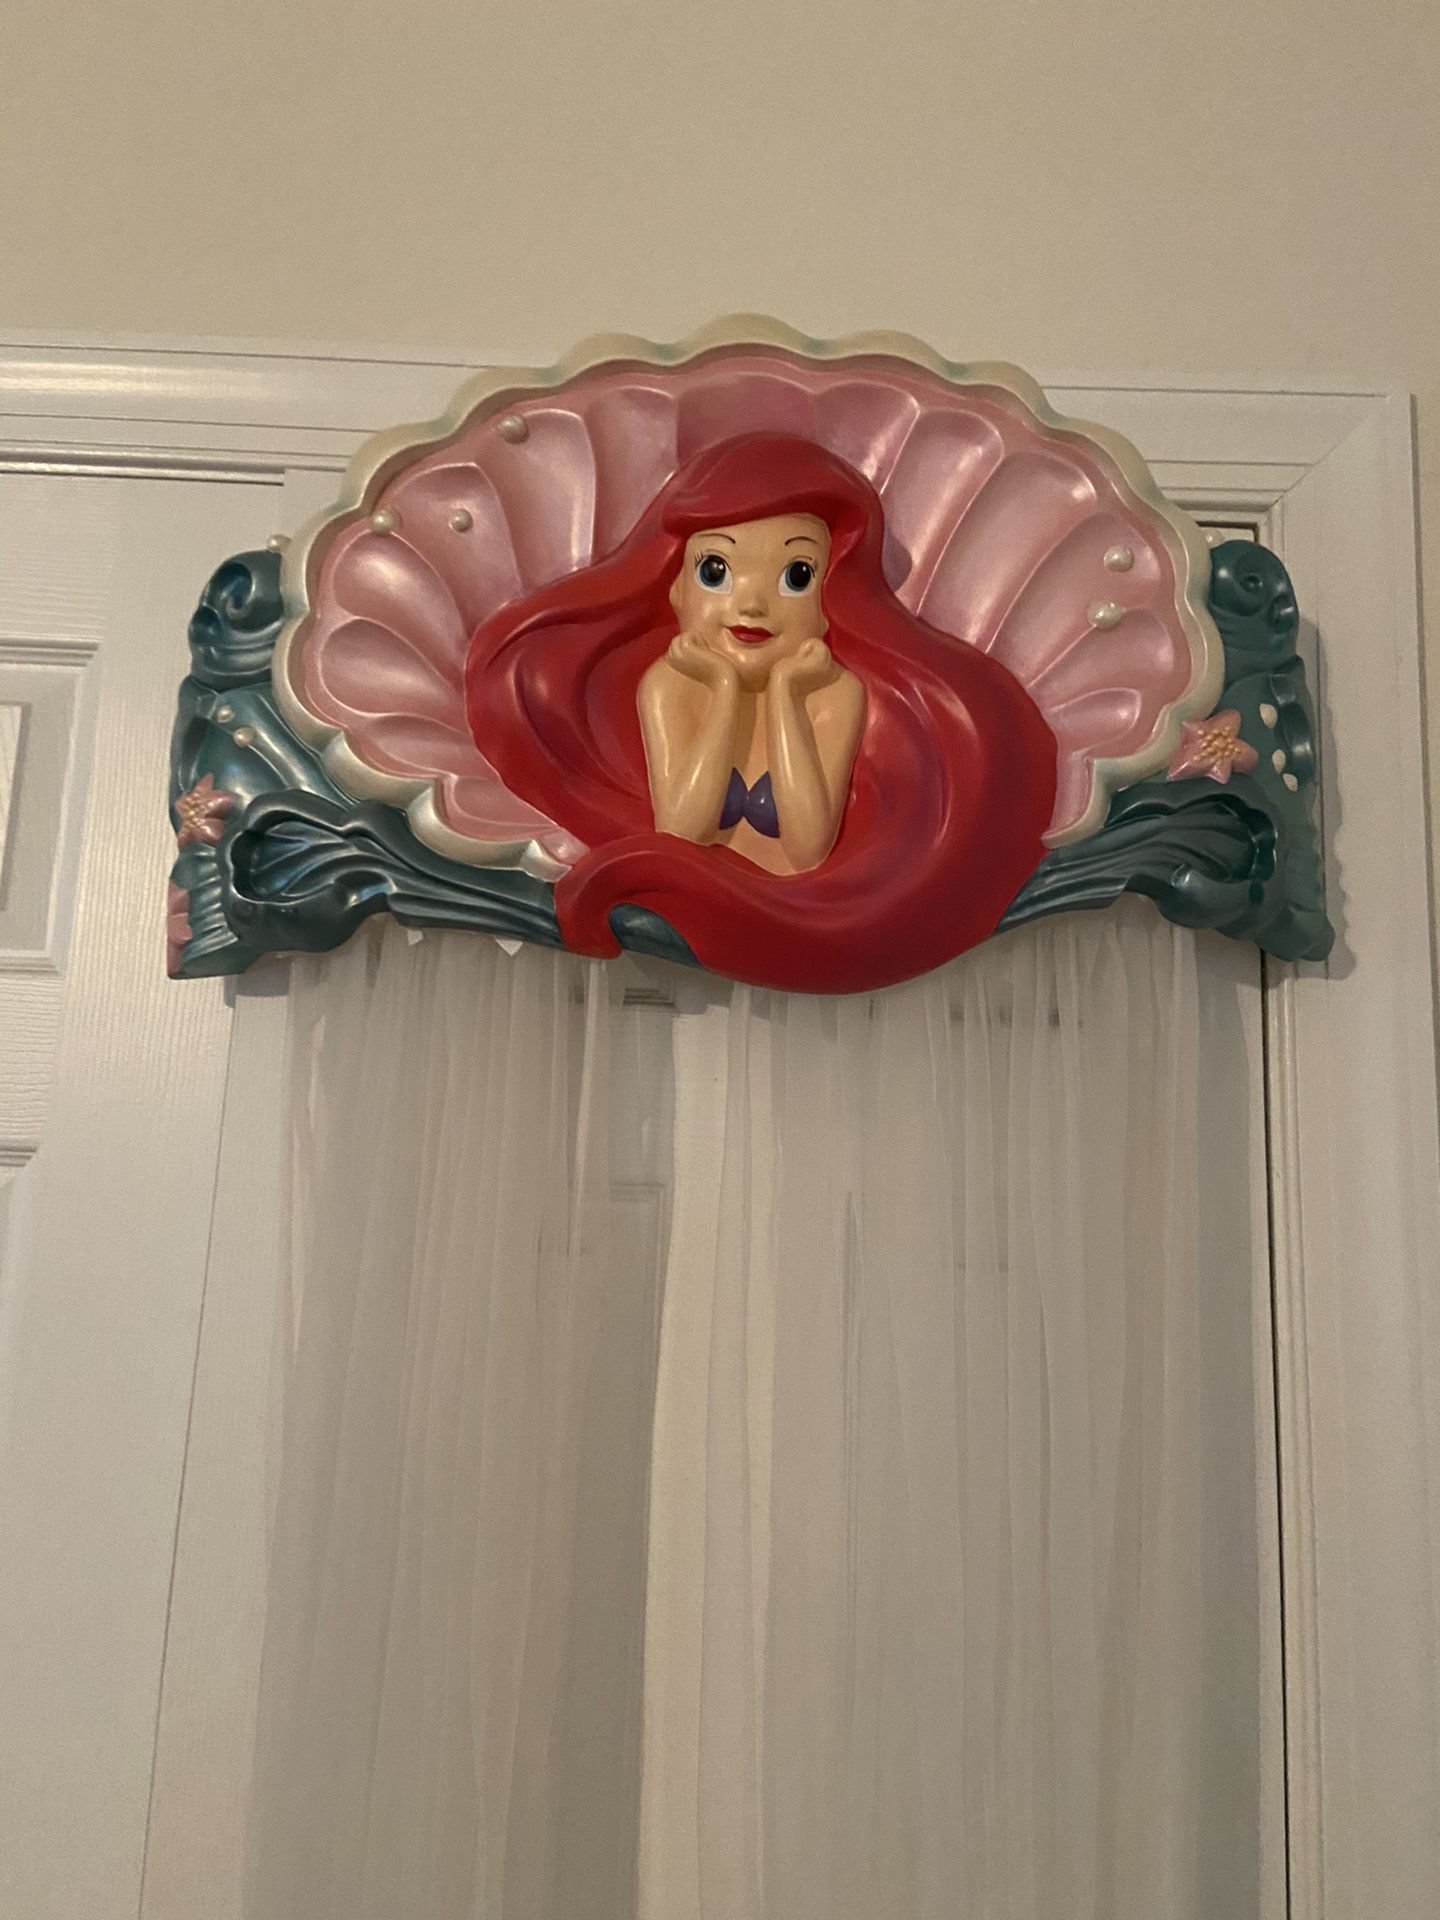 Disney’s Little Mermaid bed canopy